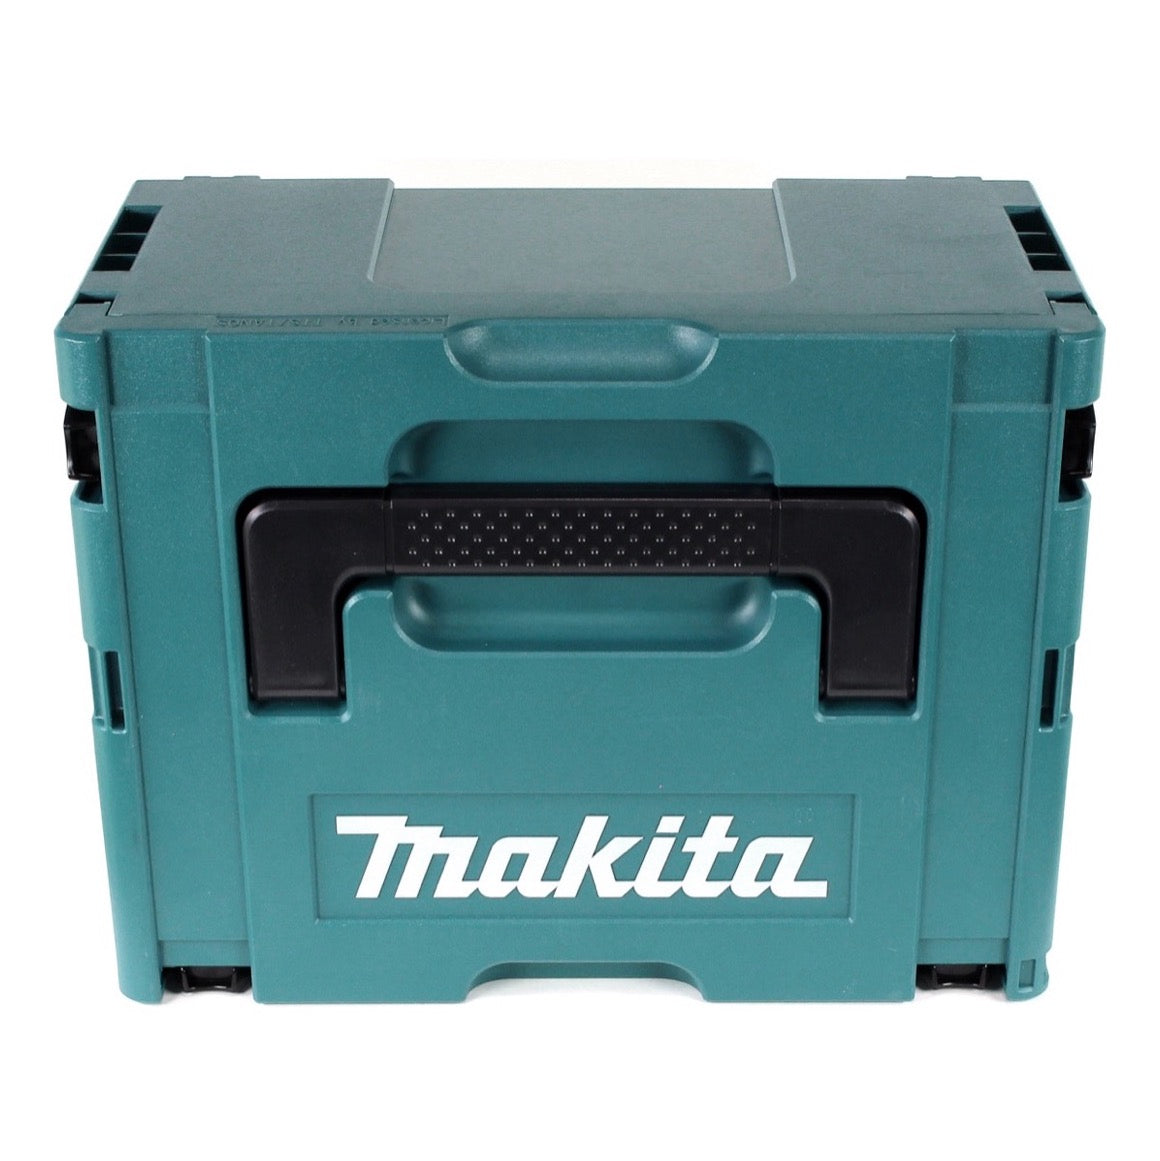 Makita DCS 553 RMJ Akku Metallhandkreissäge 18V 150 mm Brushless + 2x Akku 4,0Ah + Ladegerät + Makpac